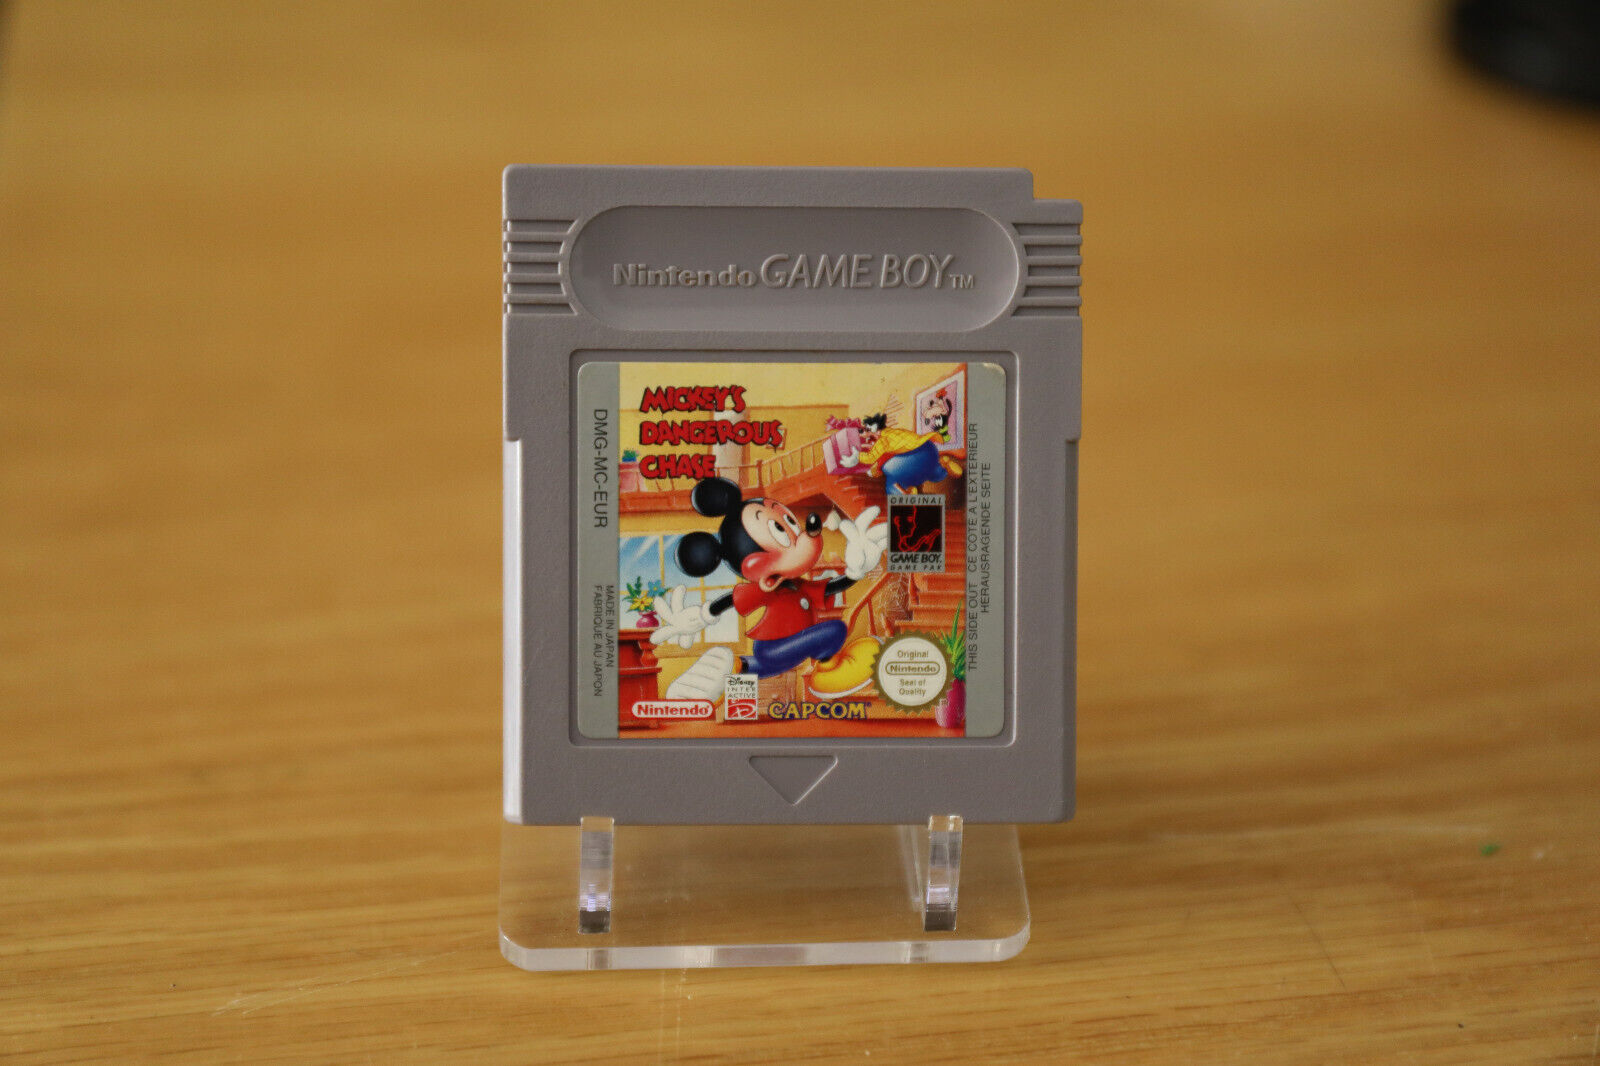 Mickey’s dangerous chase (version EUR) sur Nintendo Game Boy 100% authentic